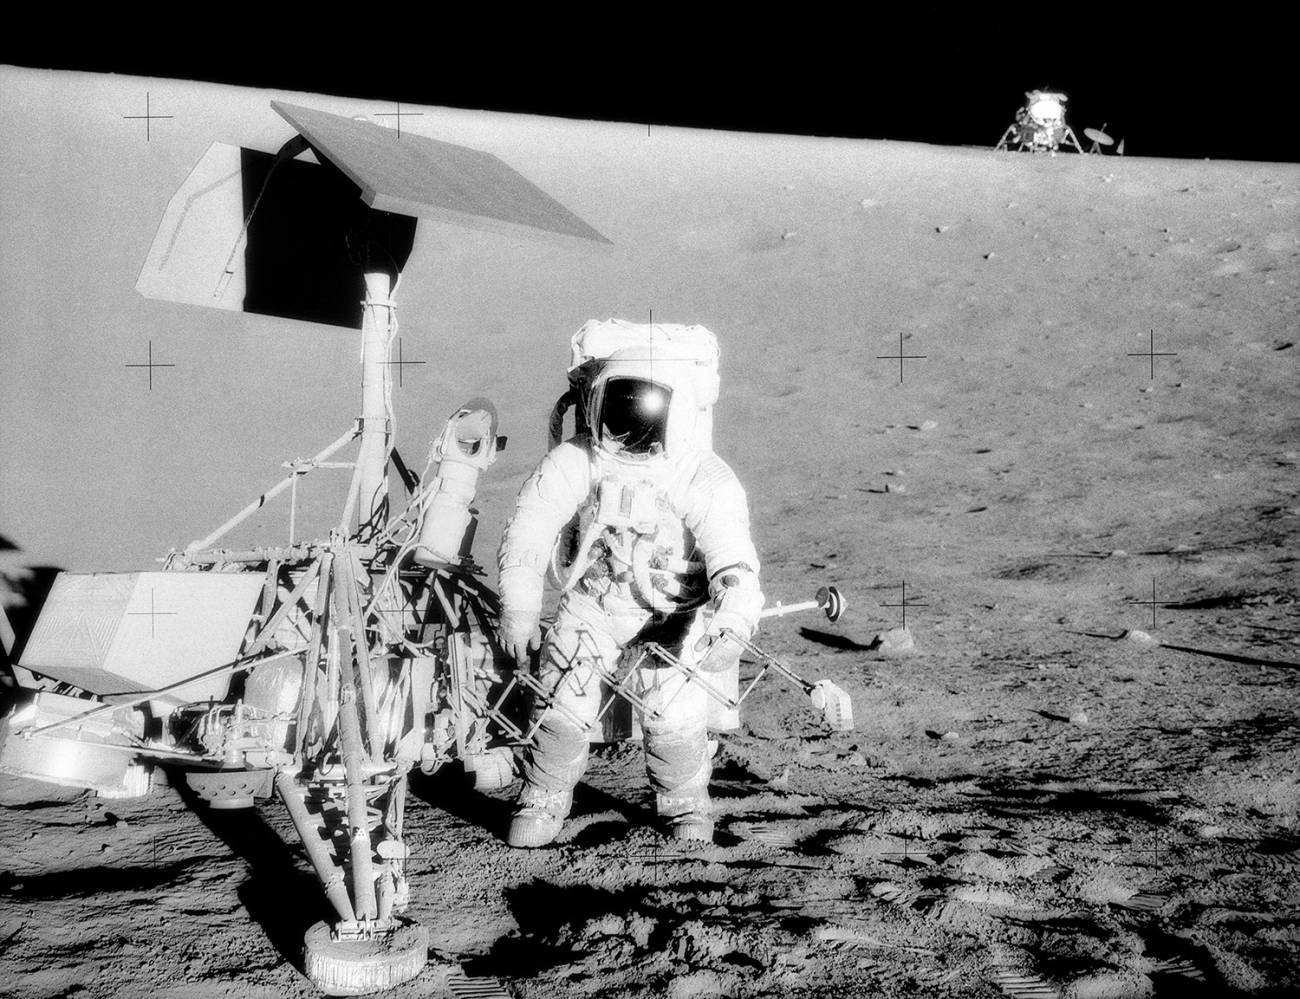 Surveyor 3 Apollo 12